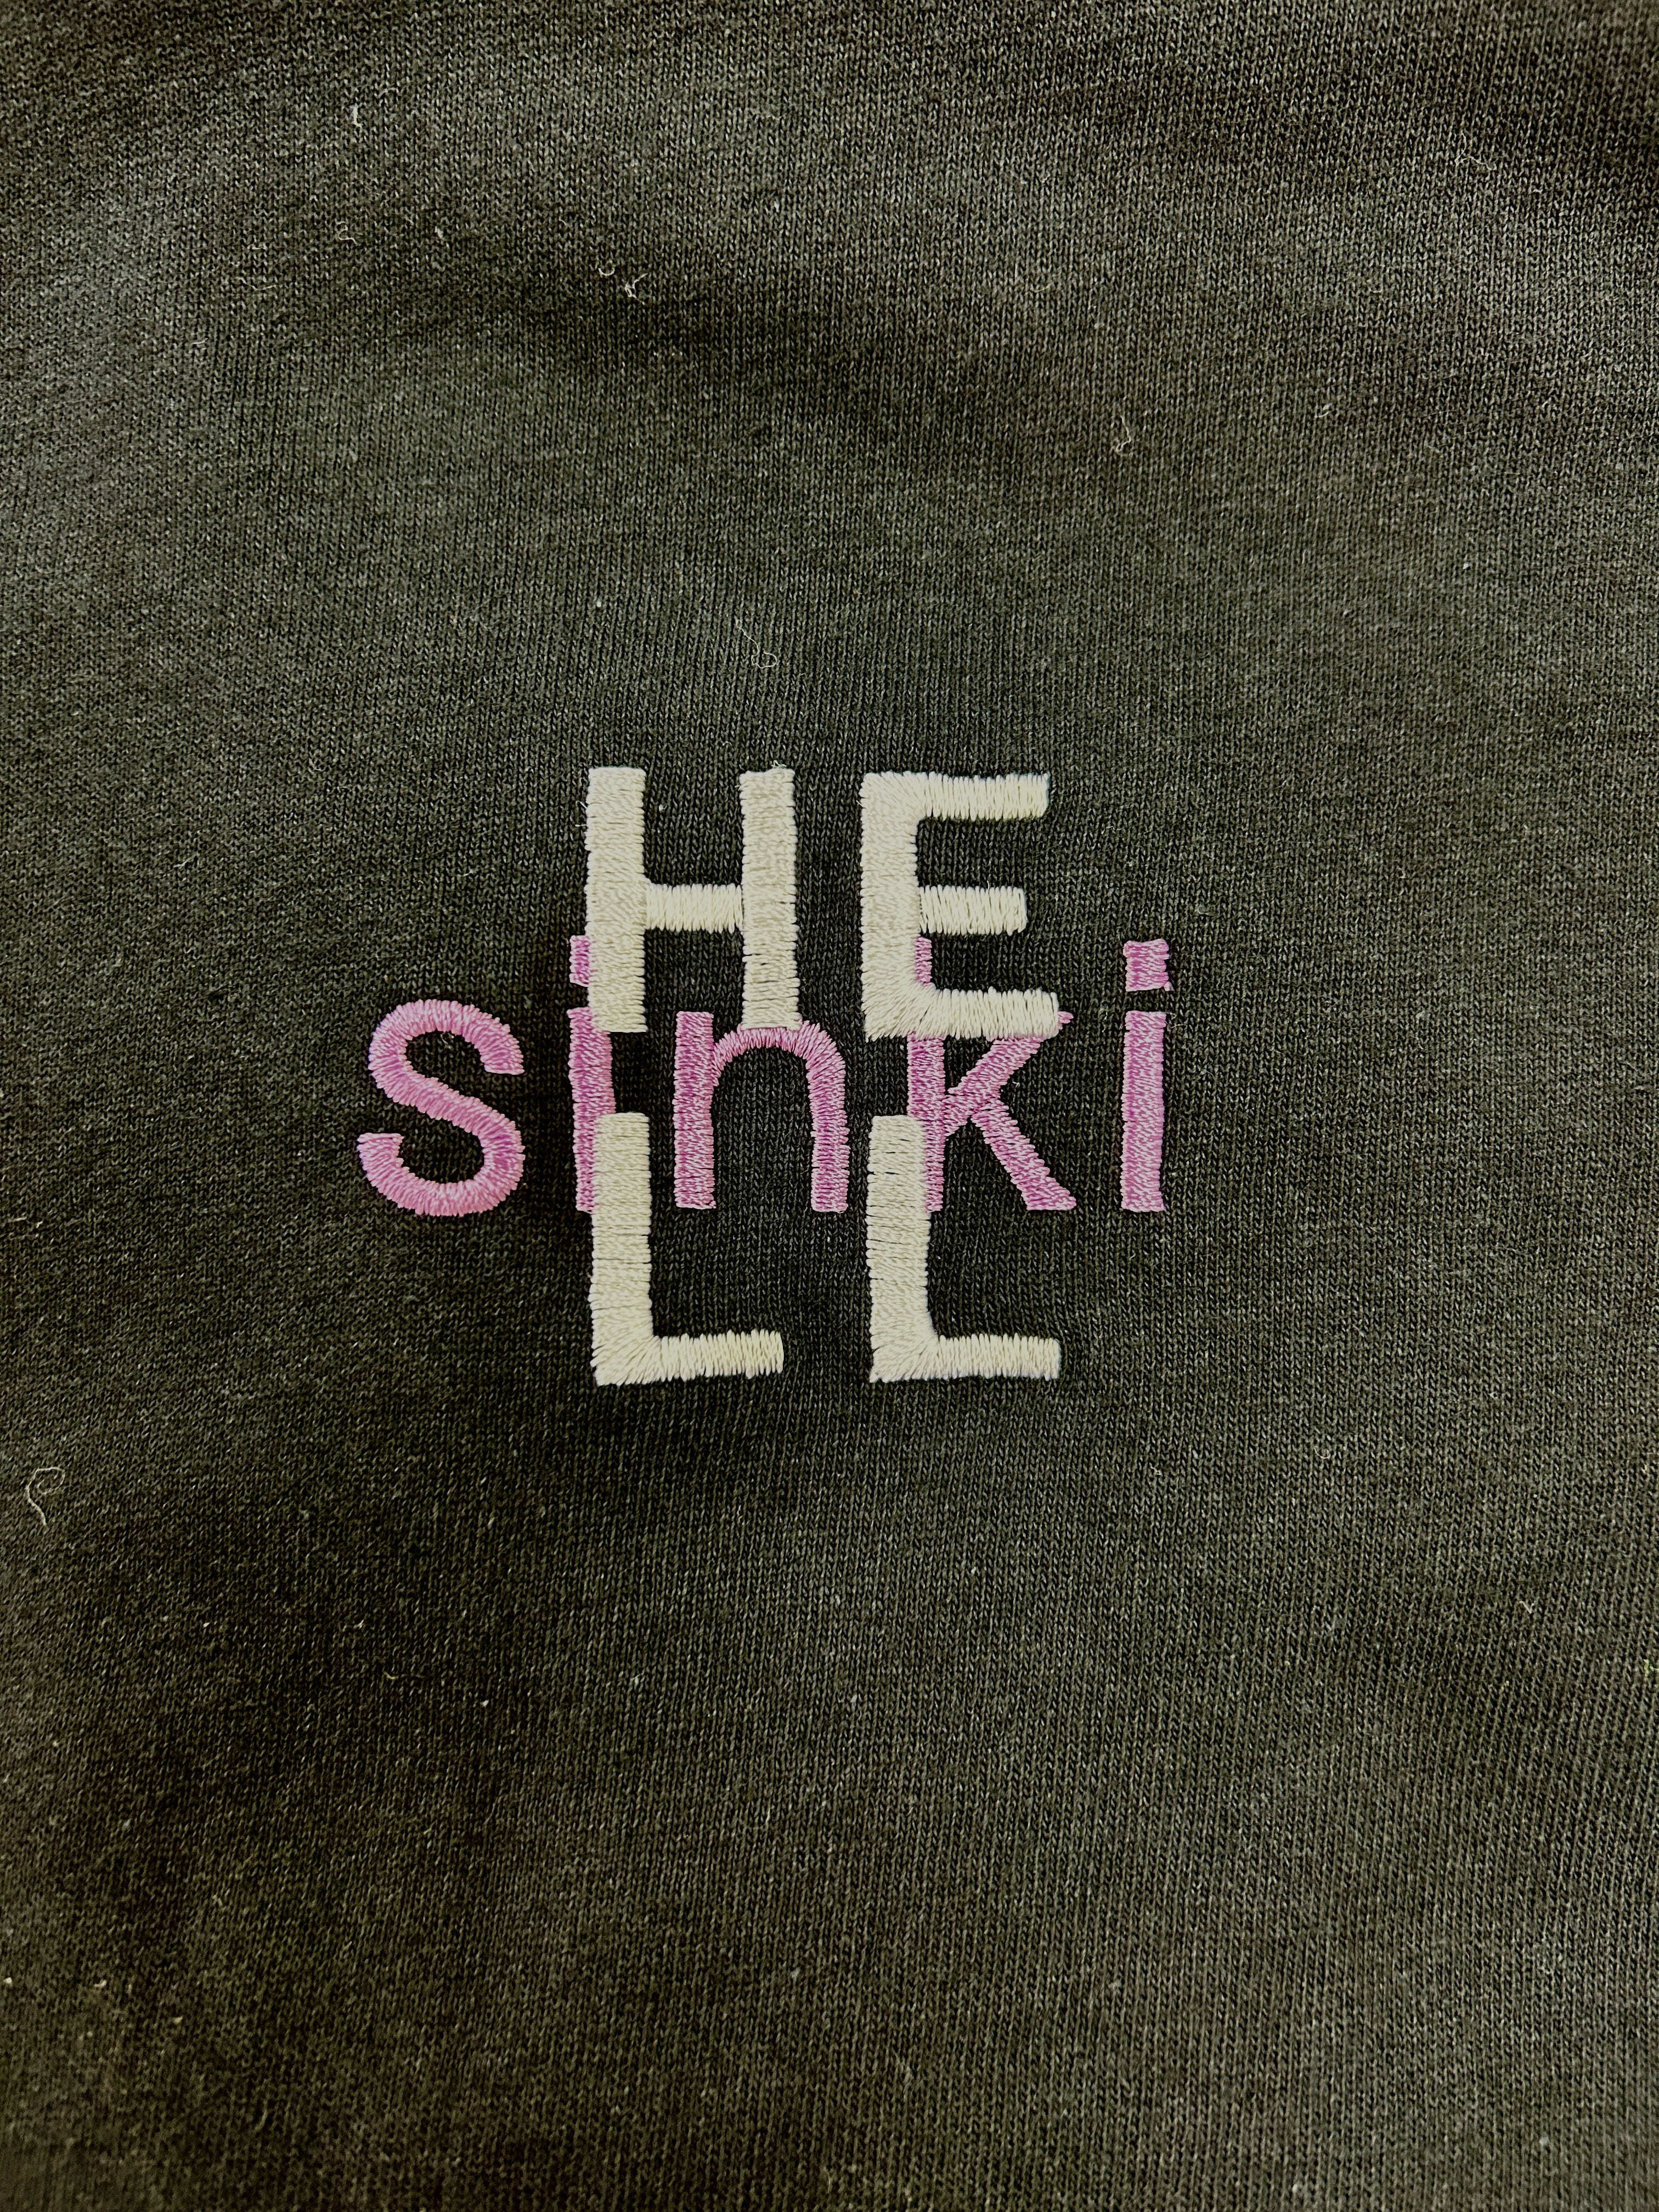 HELL sinki TEE amethyst logo ver.(black/long sleeve)